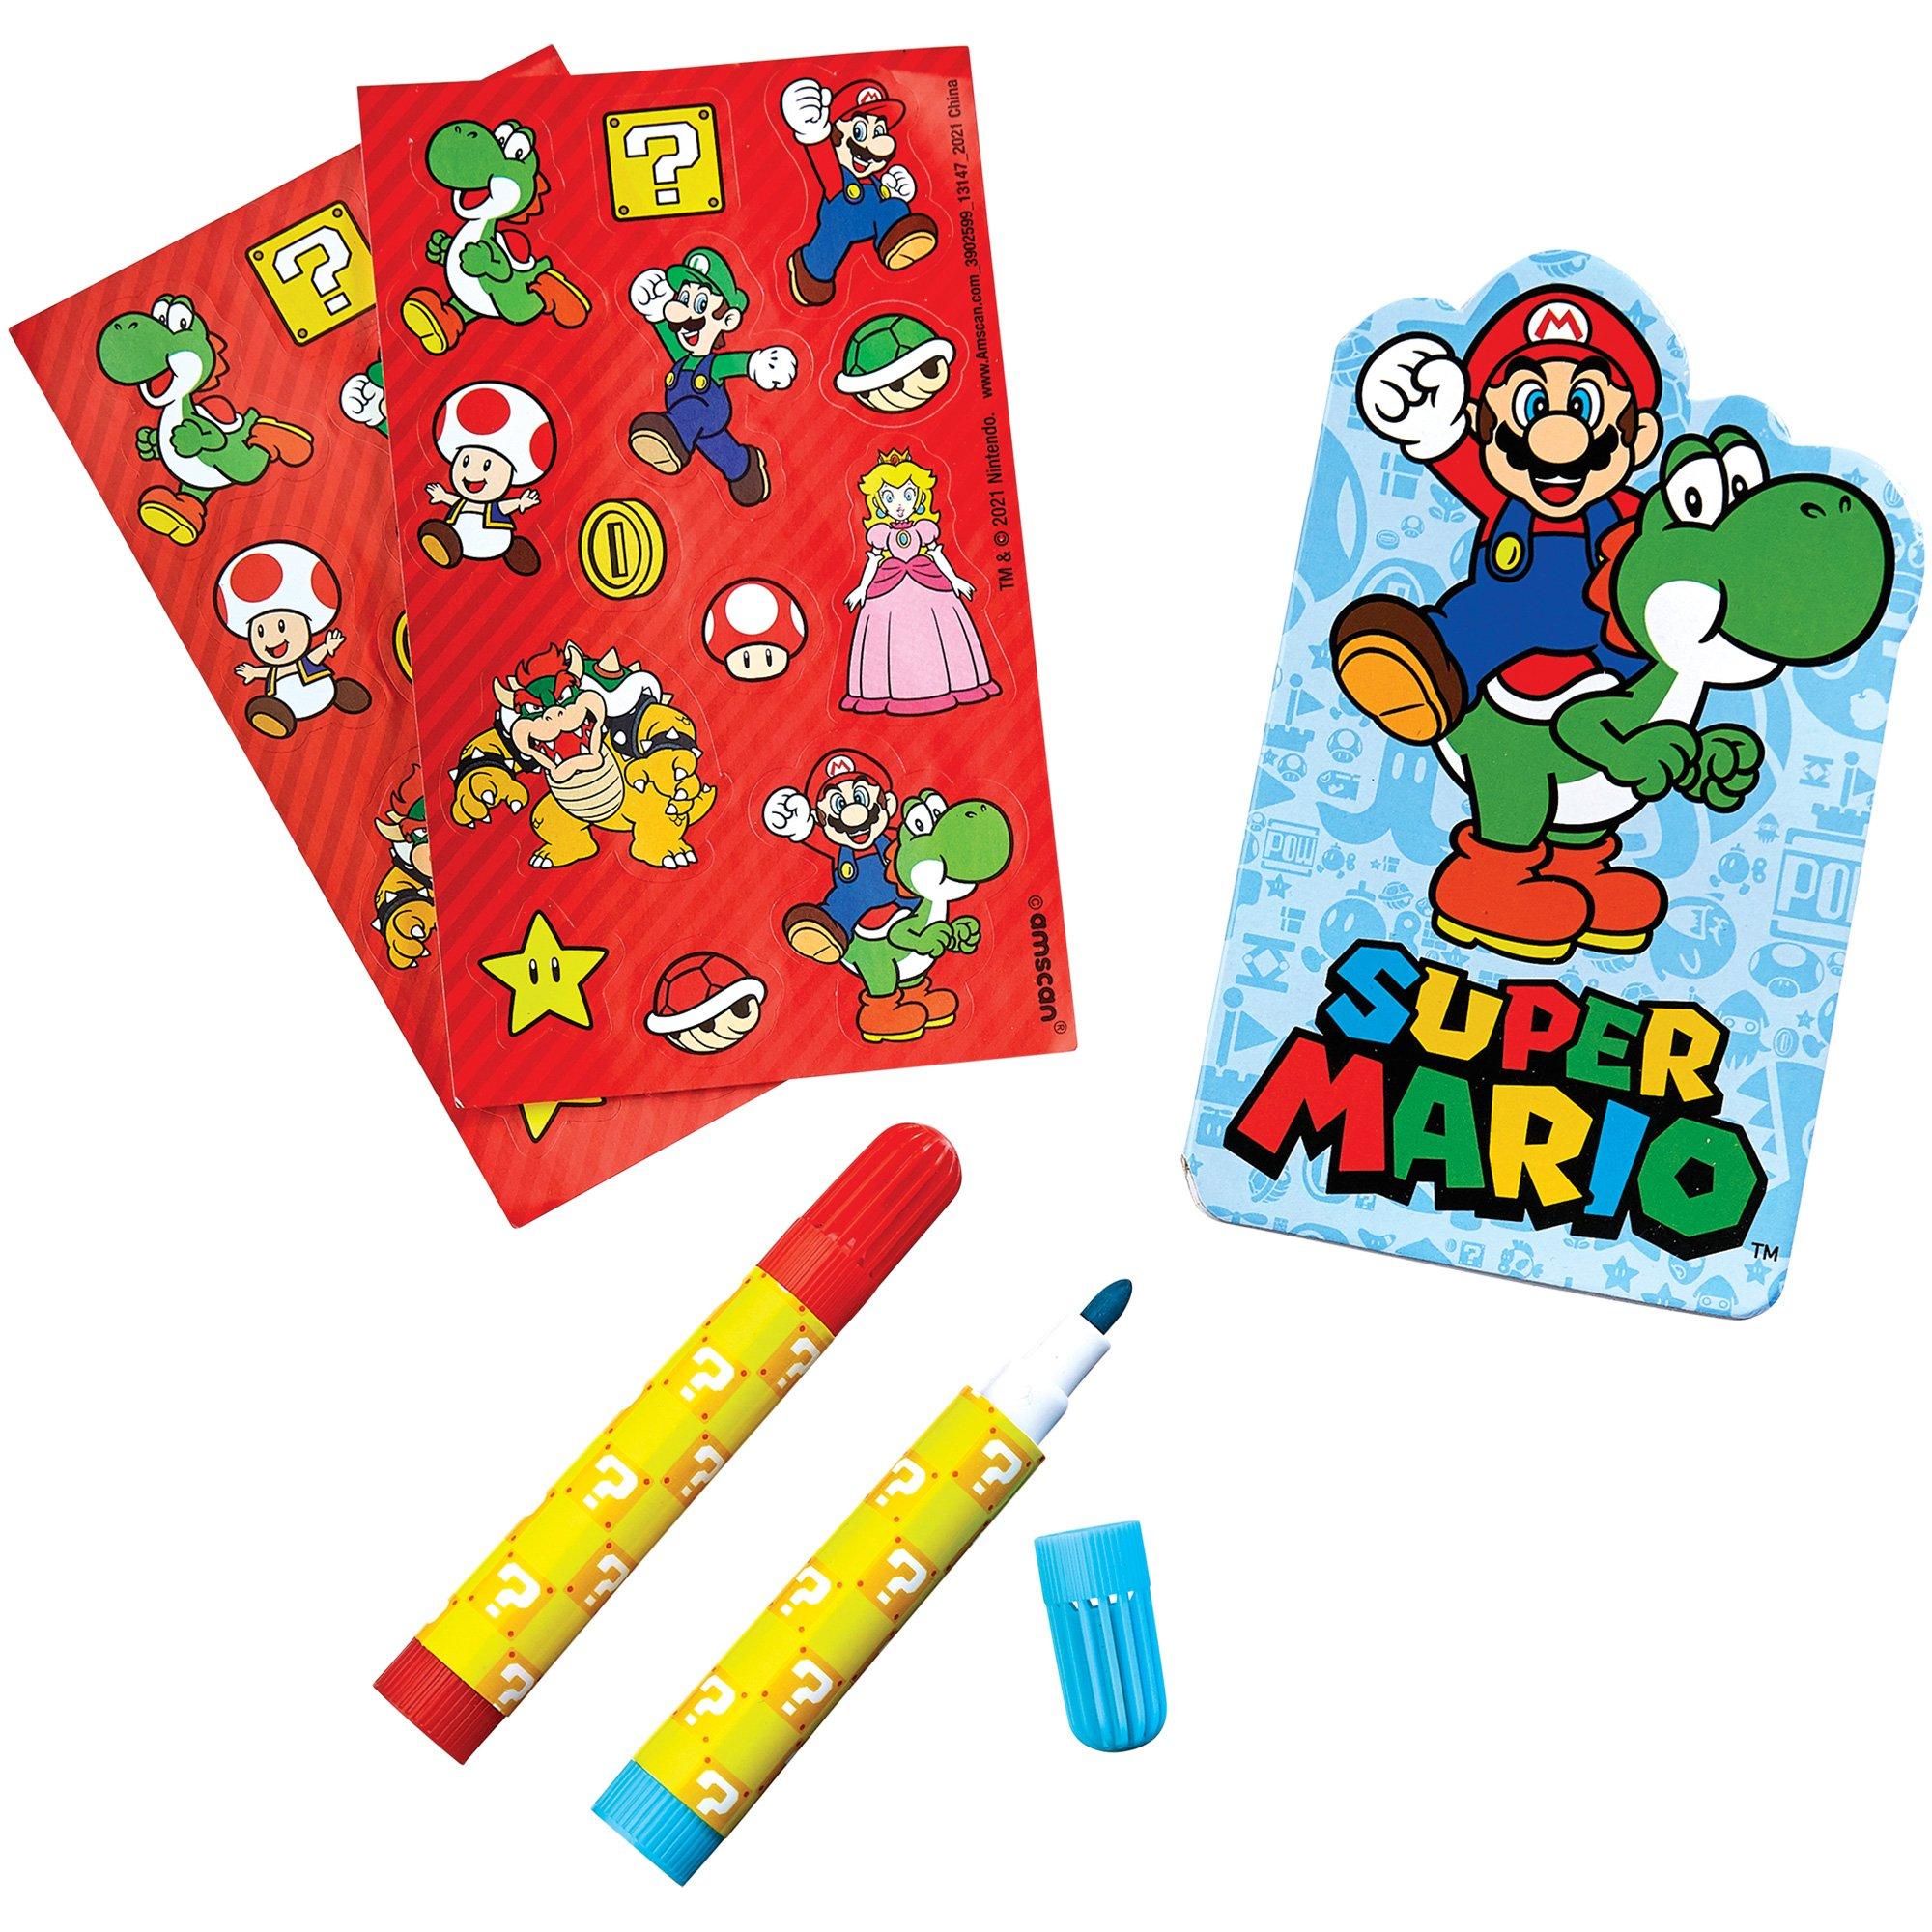 Super Mario Stationery Set, 5pc